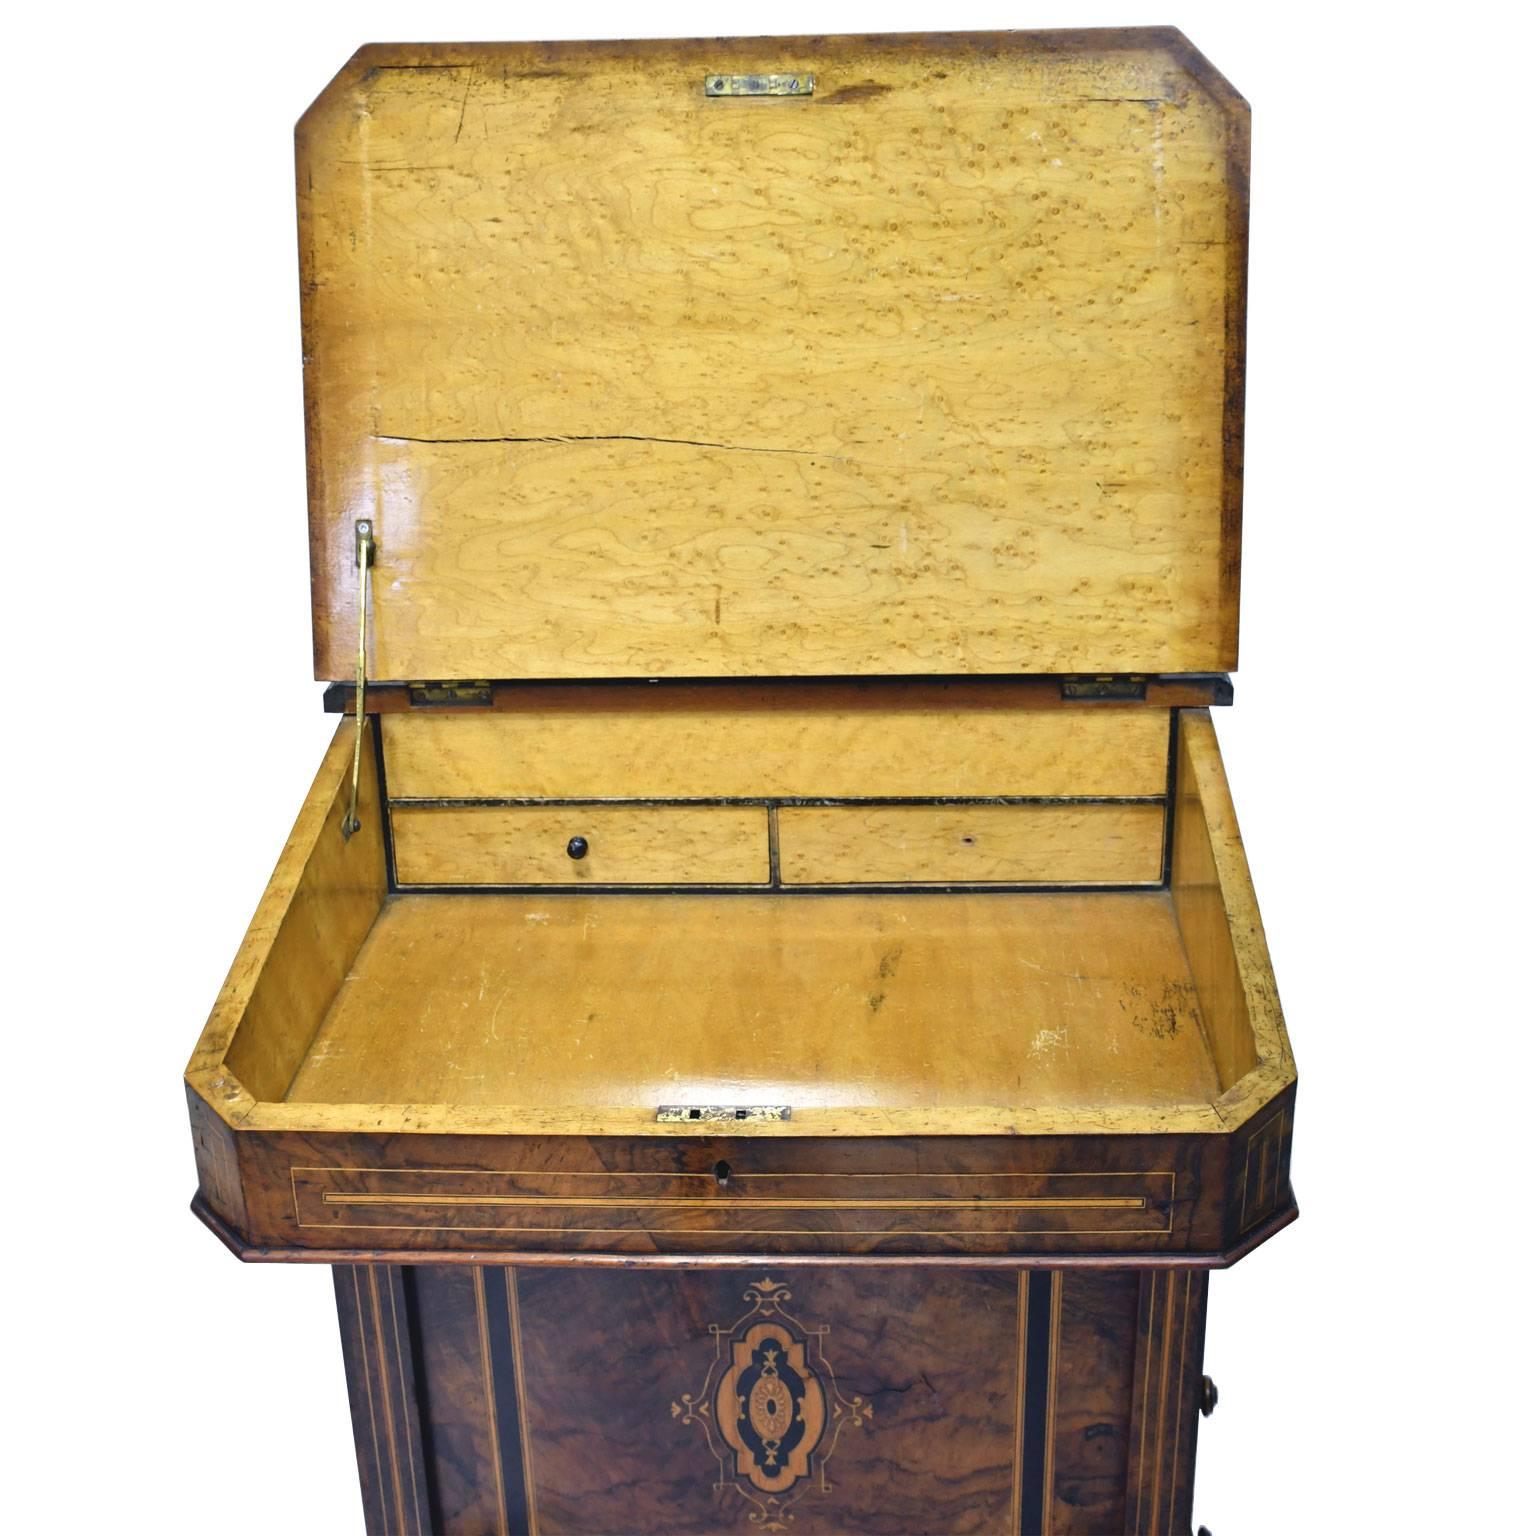 Late Victorian English Victorian Davenport Desk in Burled Walnut, circa 1870